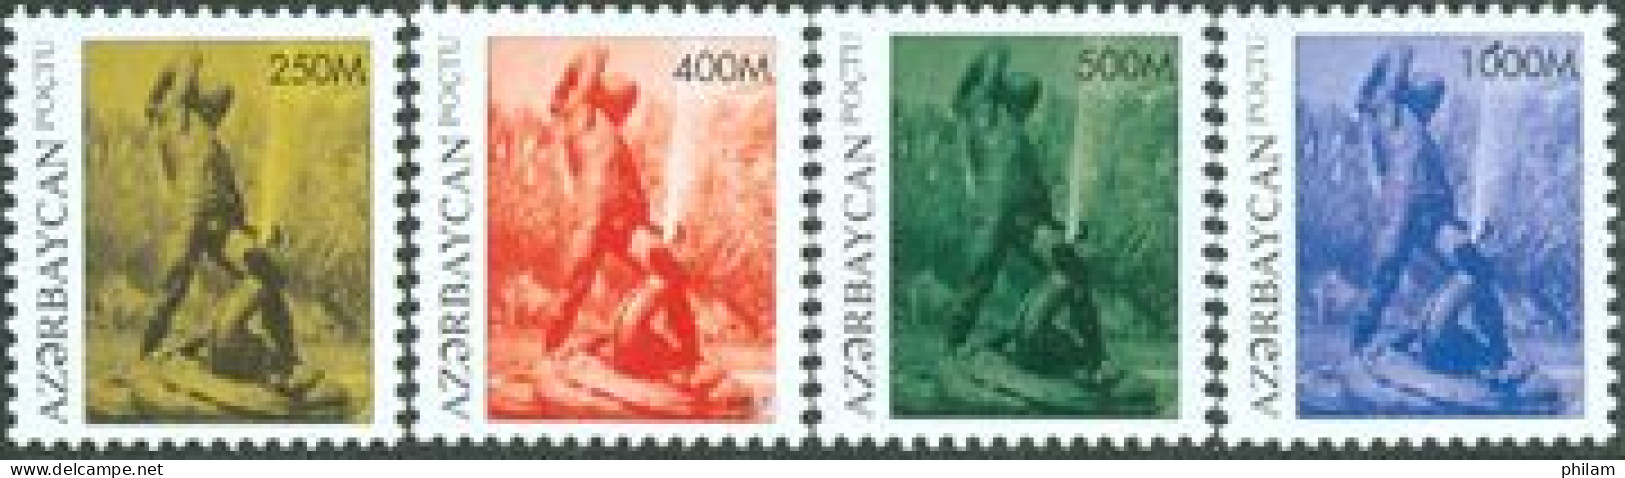 AZERBAIDJAN 1996 - Courante - Fontaine Sculptée - Légende - Azerbaïjan